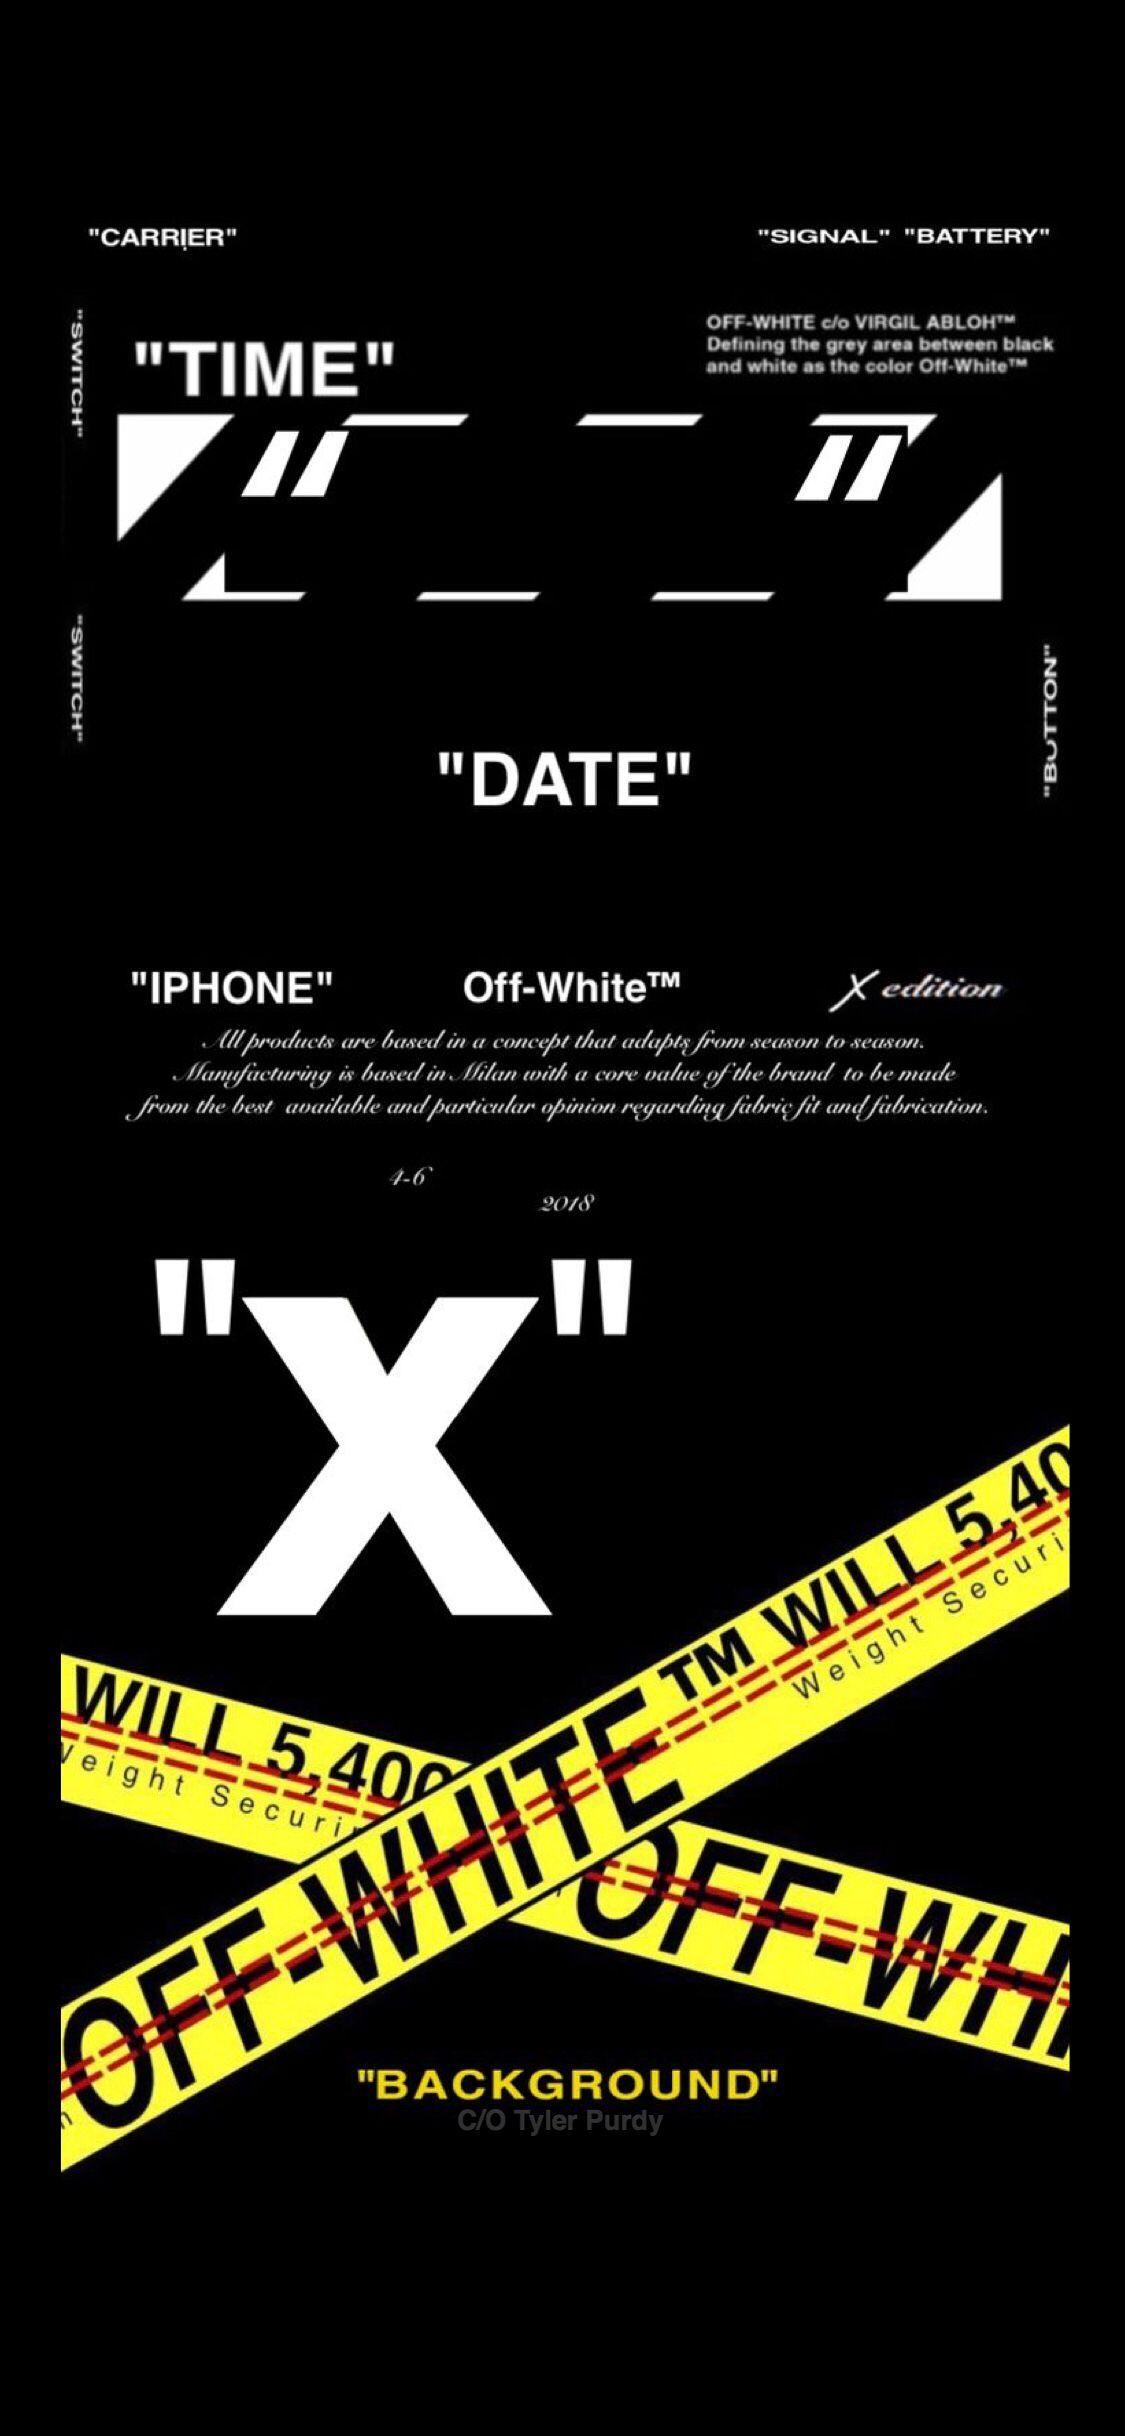 virgil abloh on X: Off-White™ EM PTY GALLERY phone wallpaper